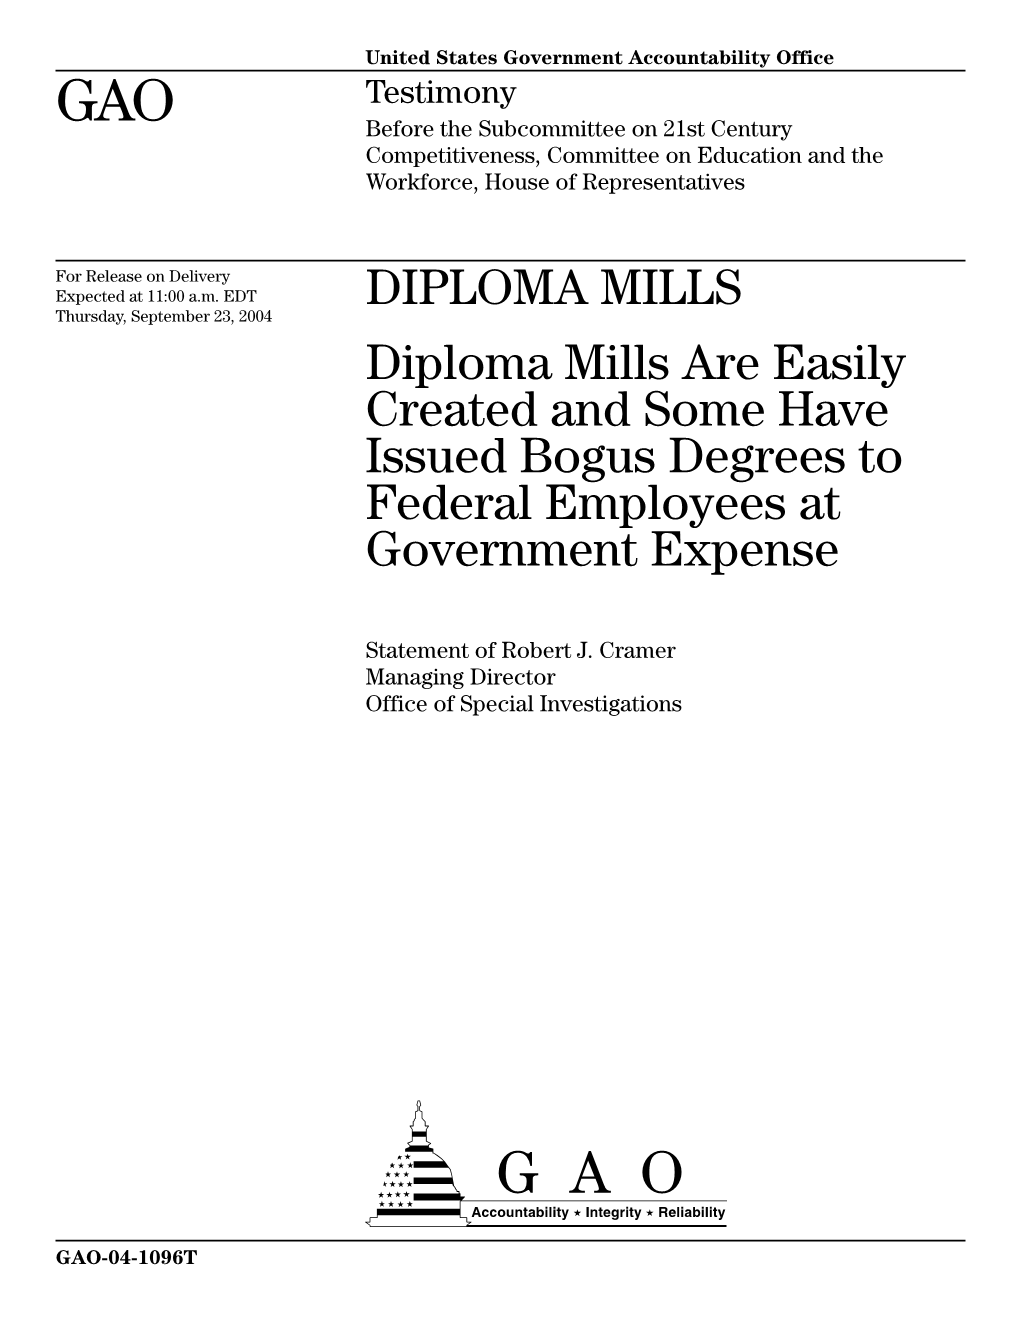 GAO-04-1096T Diploma Mills